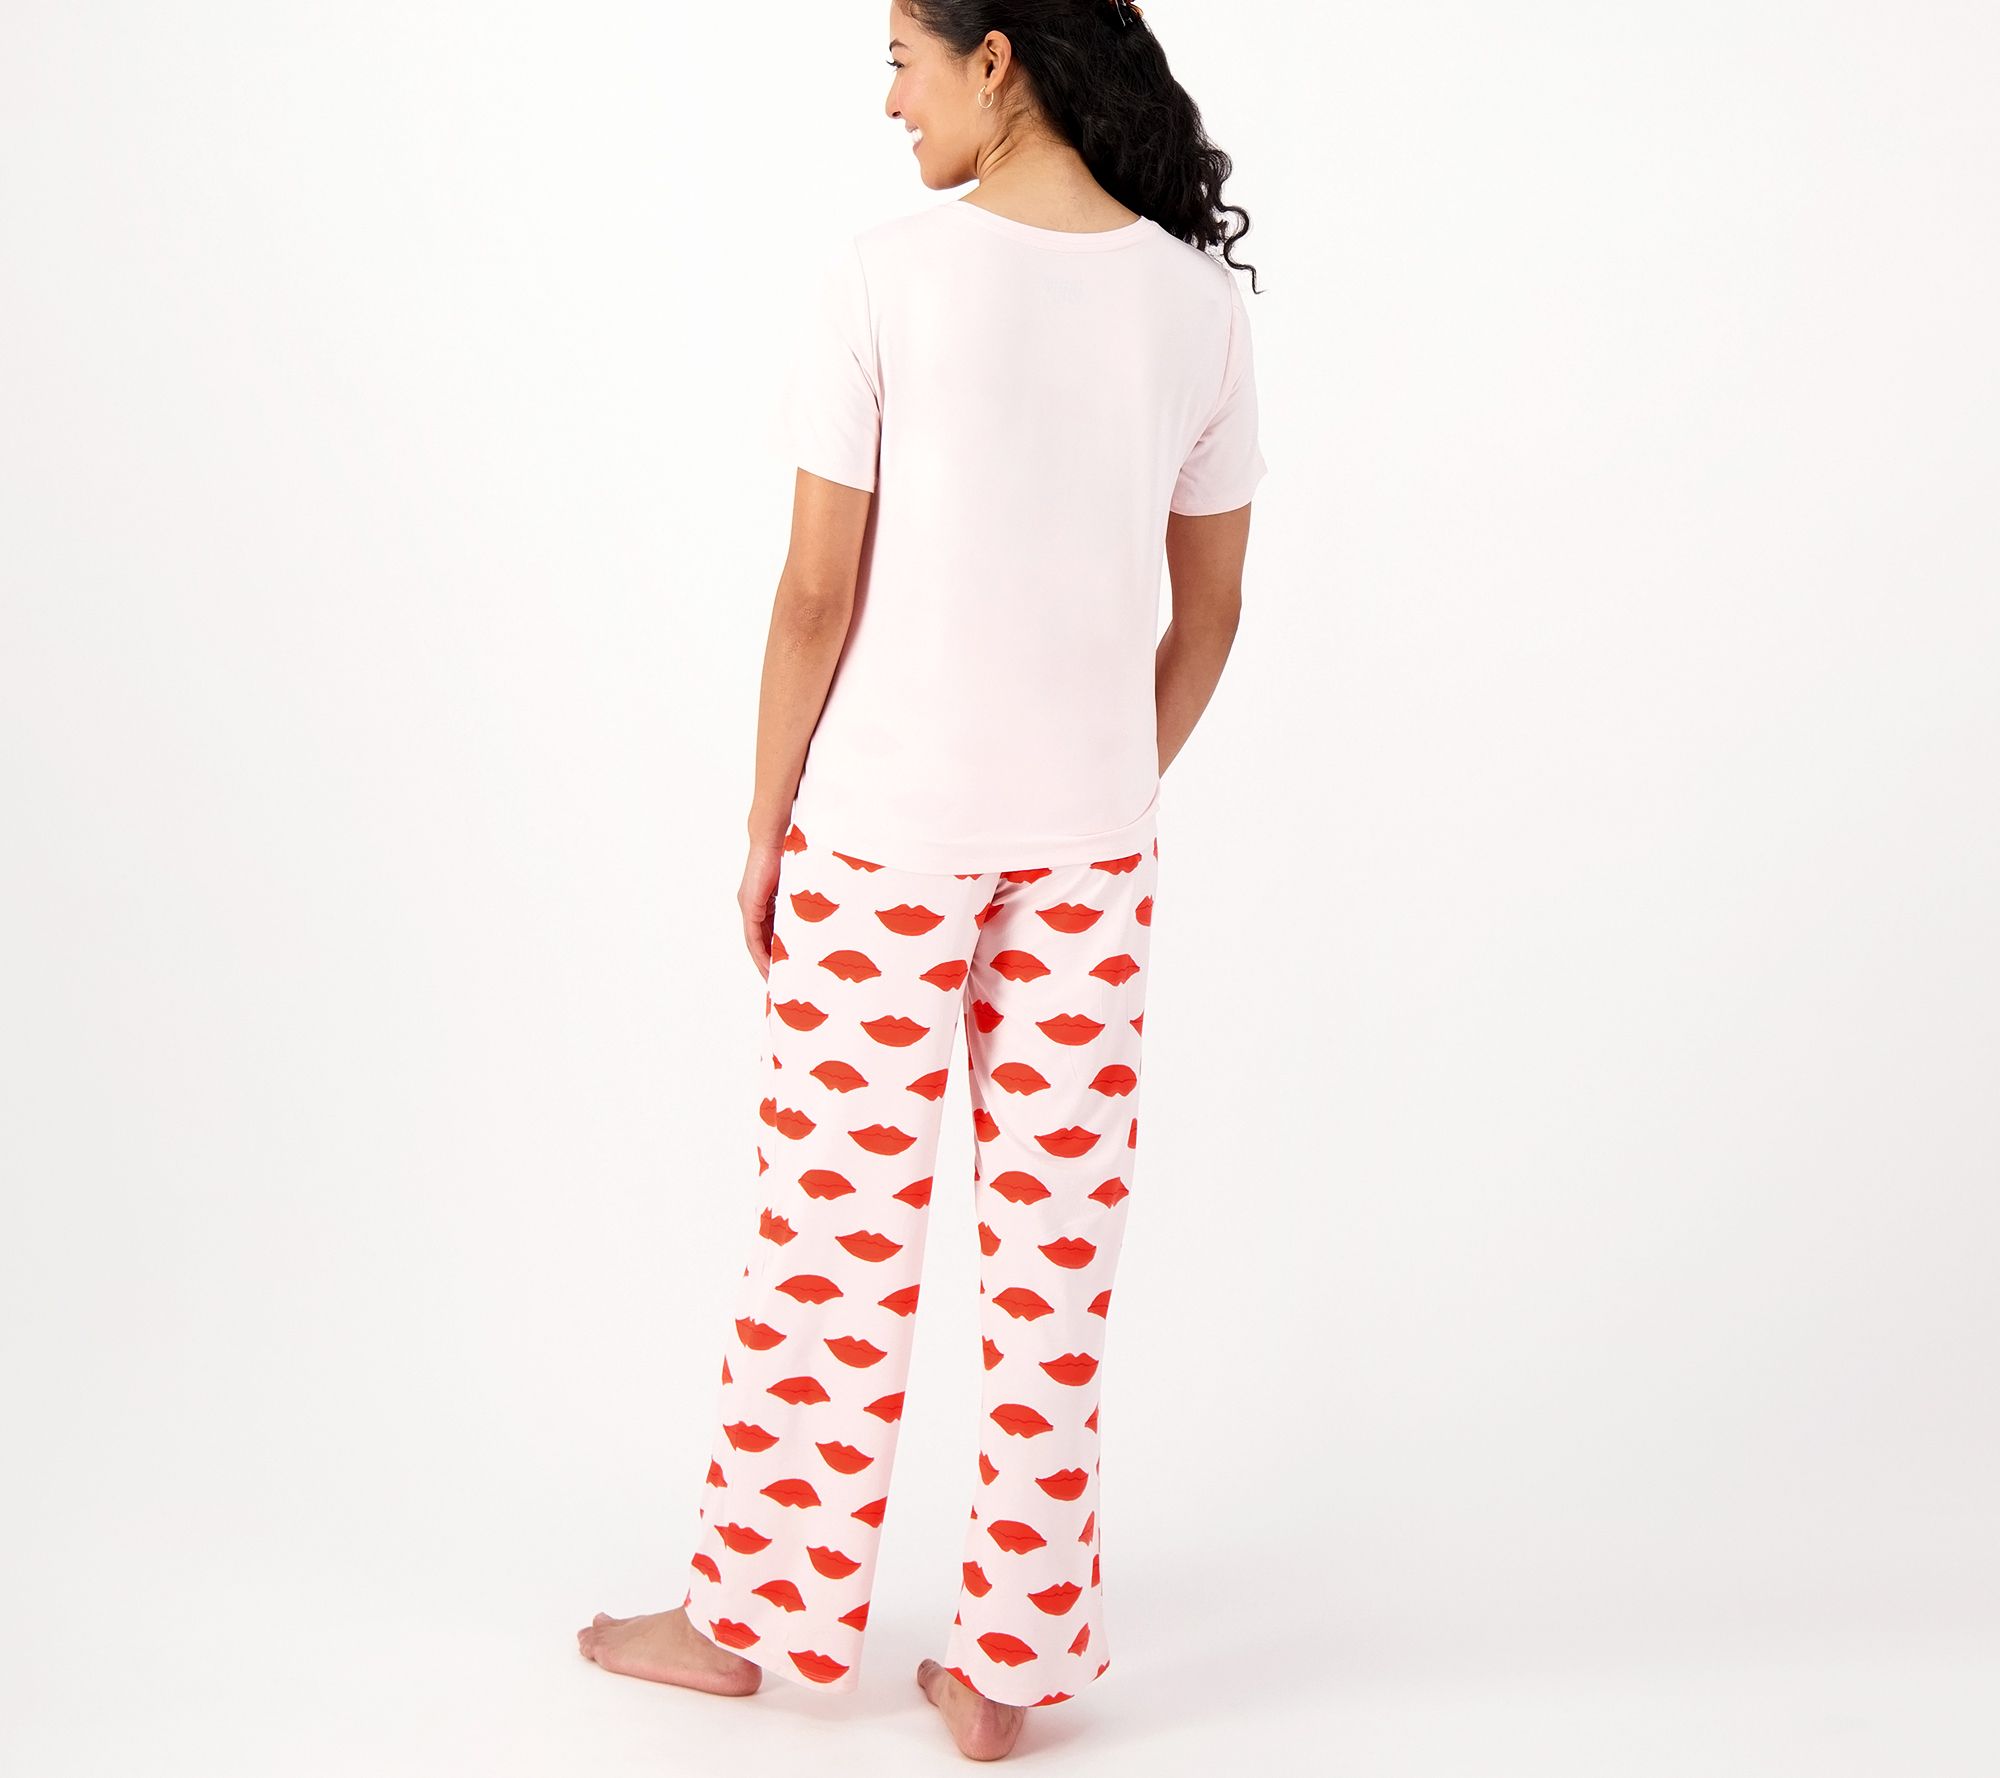 Women's Pajama set, Nightsuit, Women's clothing, Indian, Best nightwear,  loungewear – NeceSera